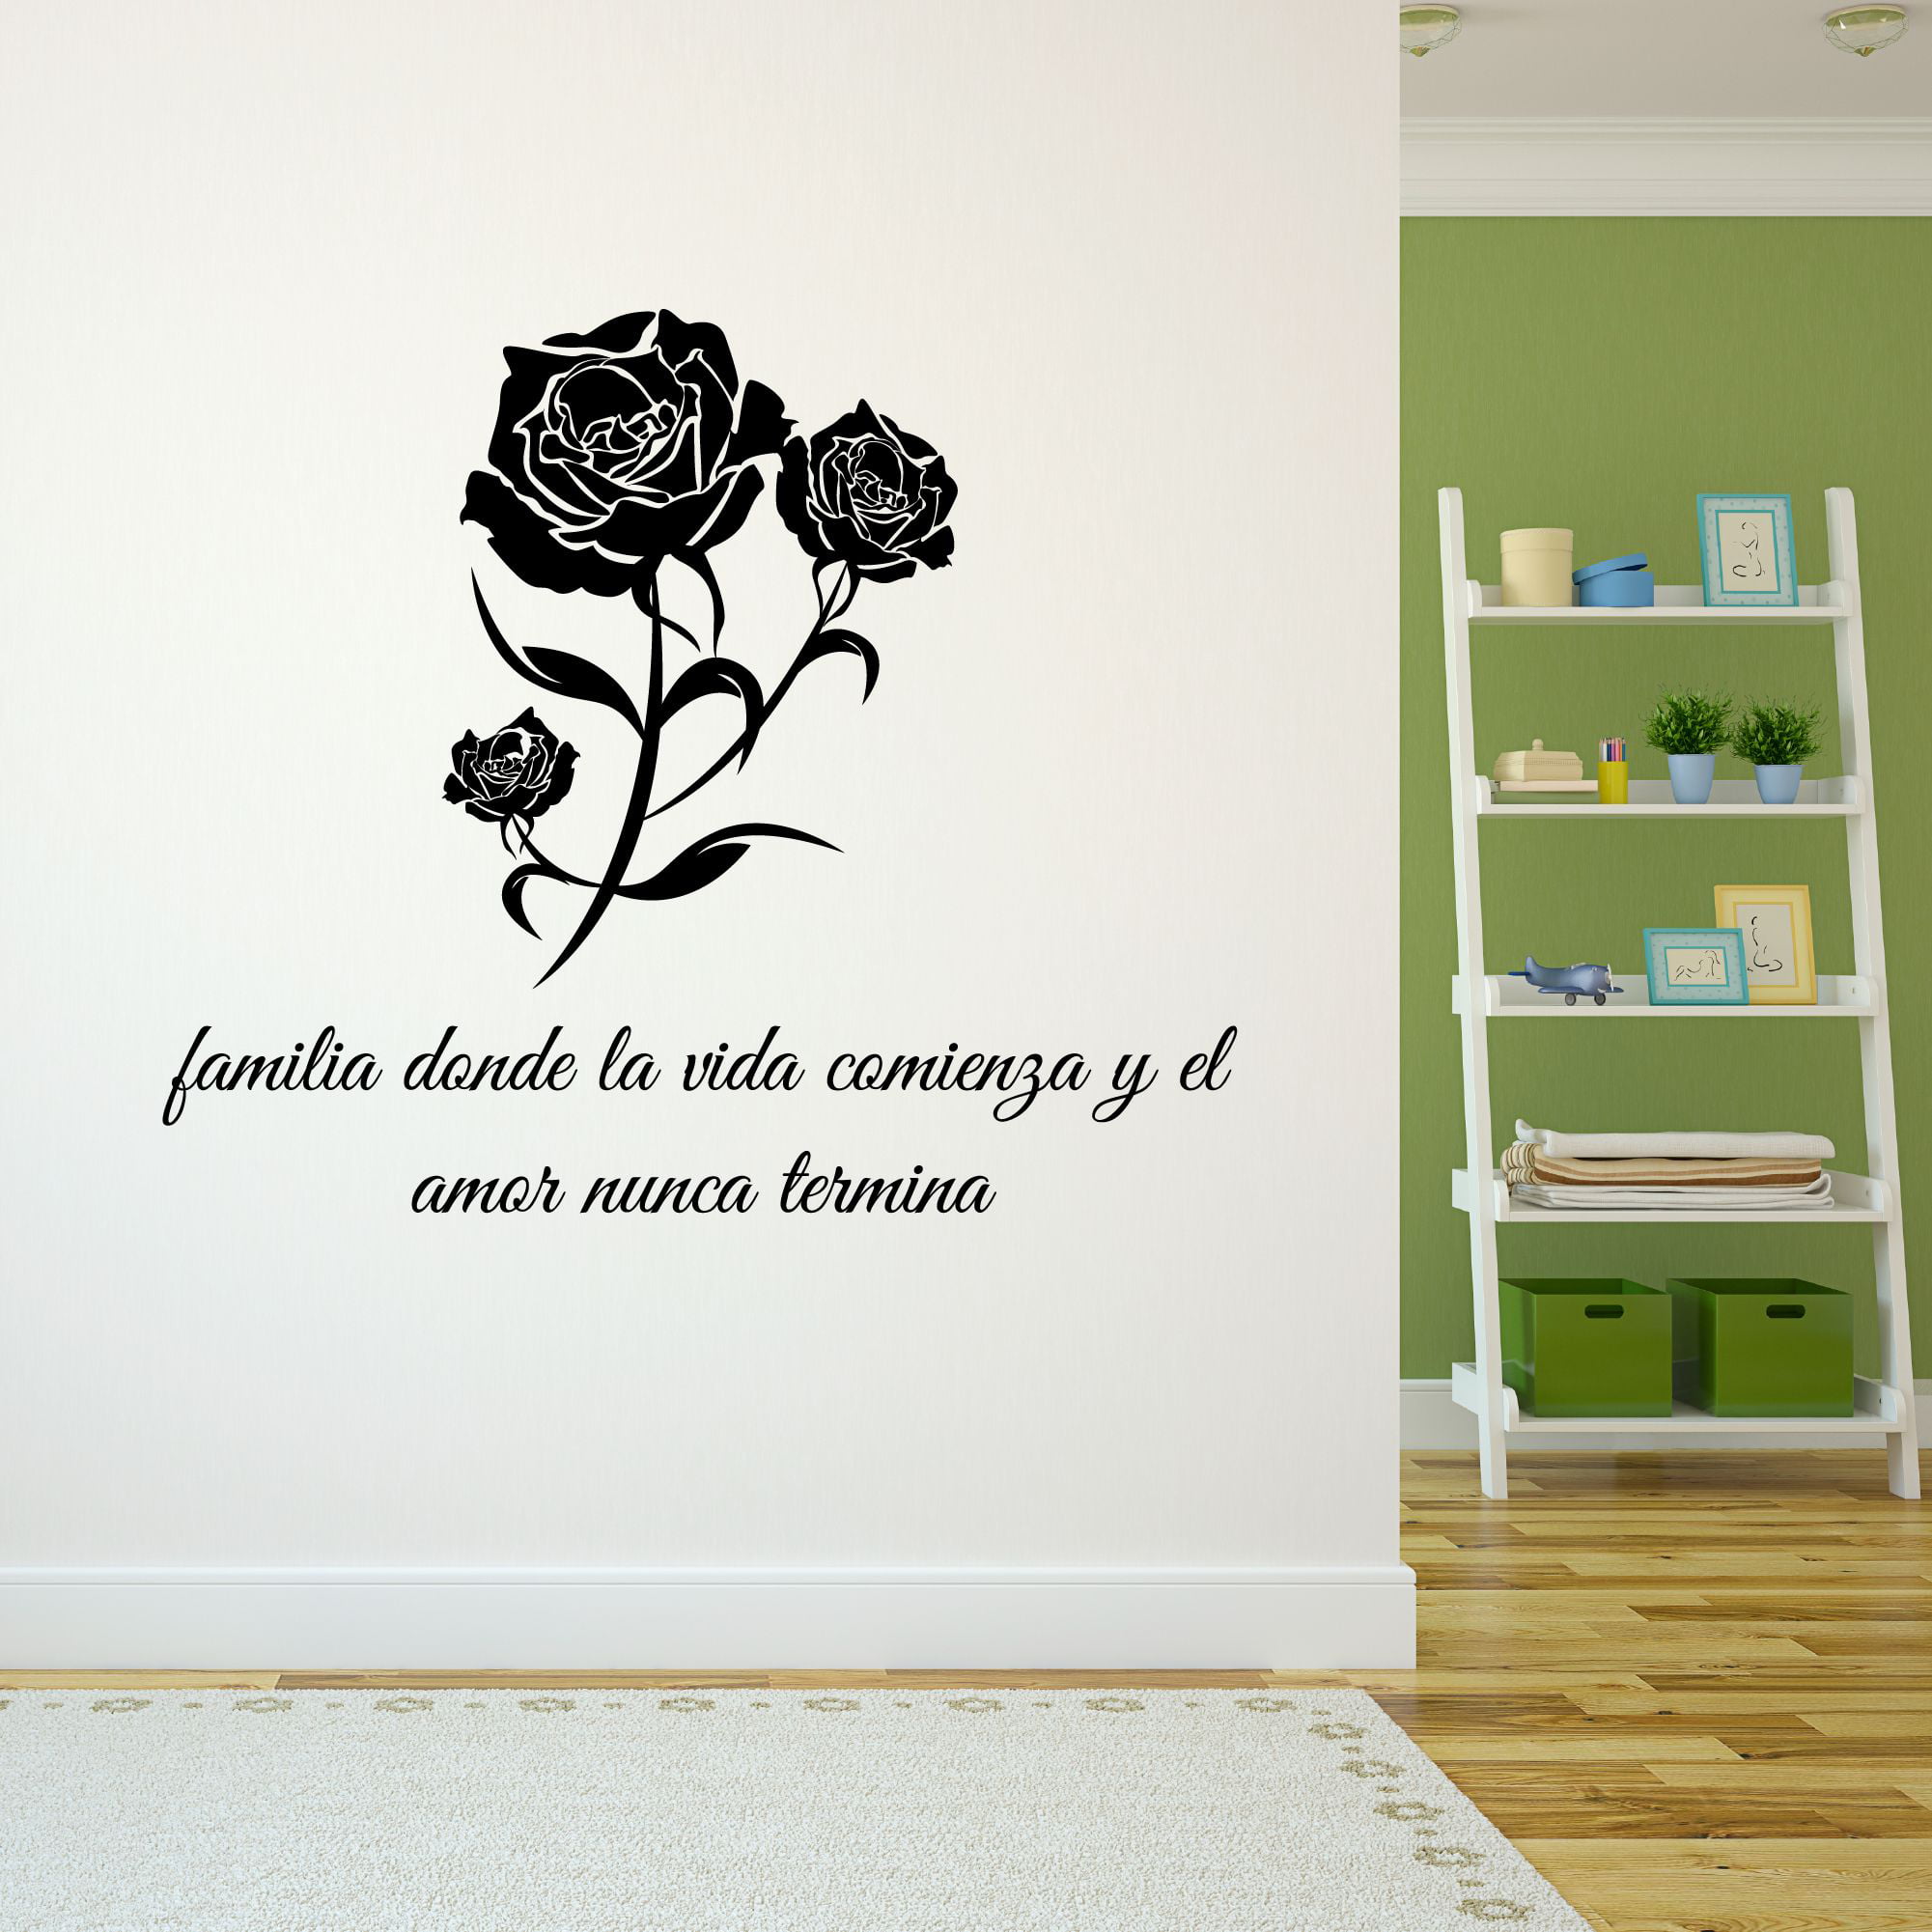 Spanish Wall Decals for Family Living Room - Familia donde la vida comienza  y el amor nunca termina Family Love Quote Home Wall Sticker - Size: 40 In x  32 In 